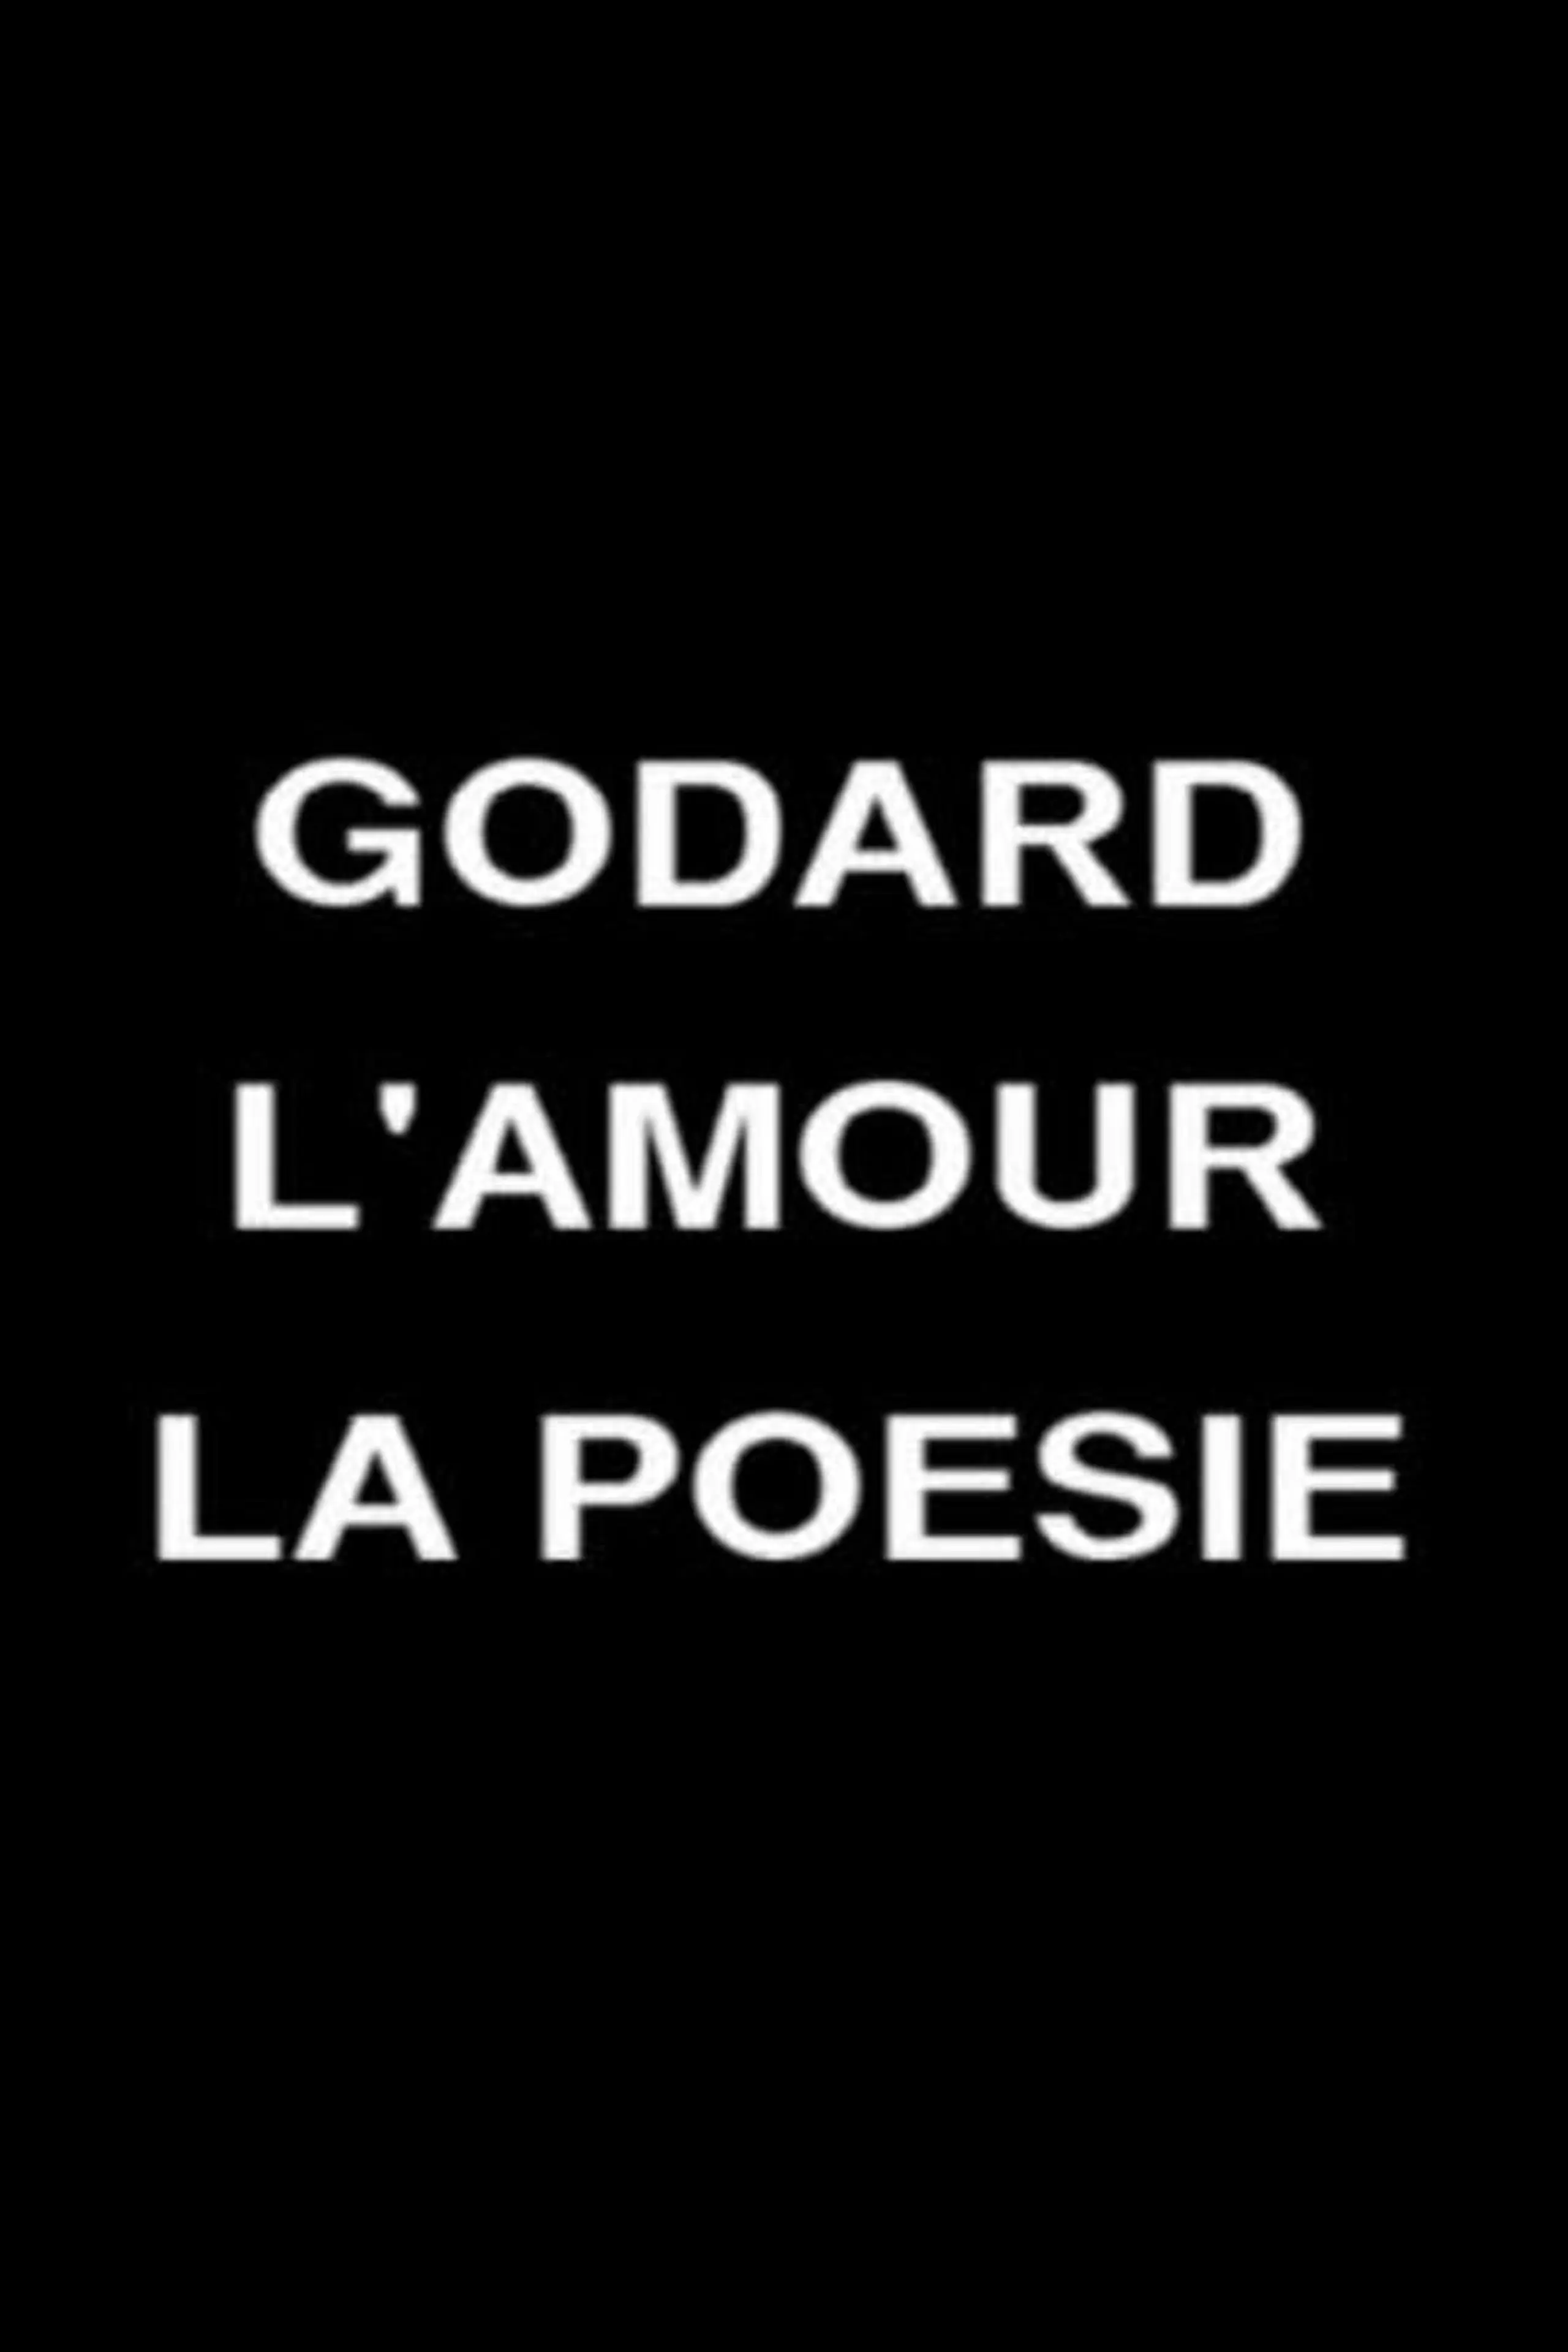 Godard, Love and Poetry